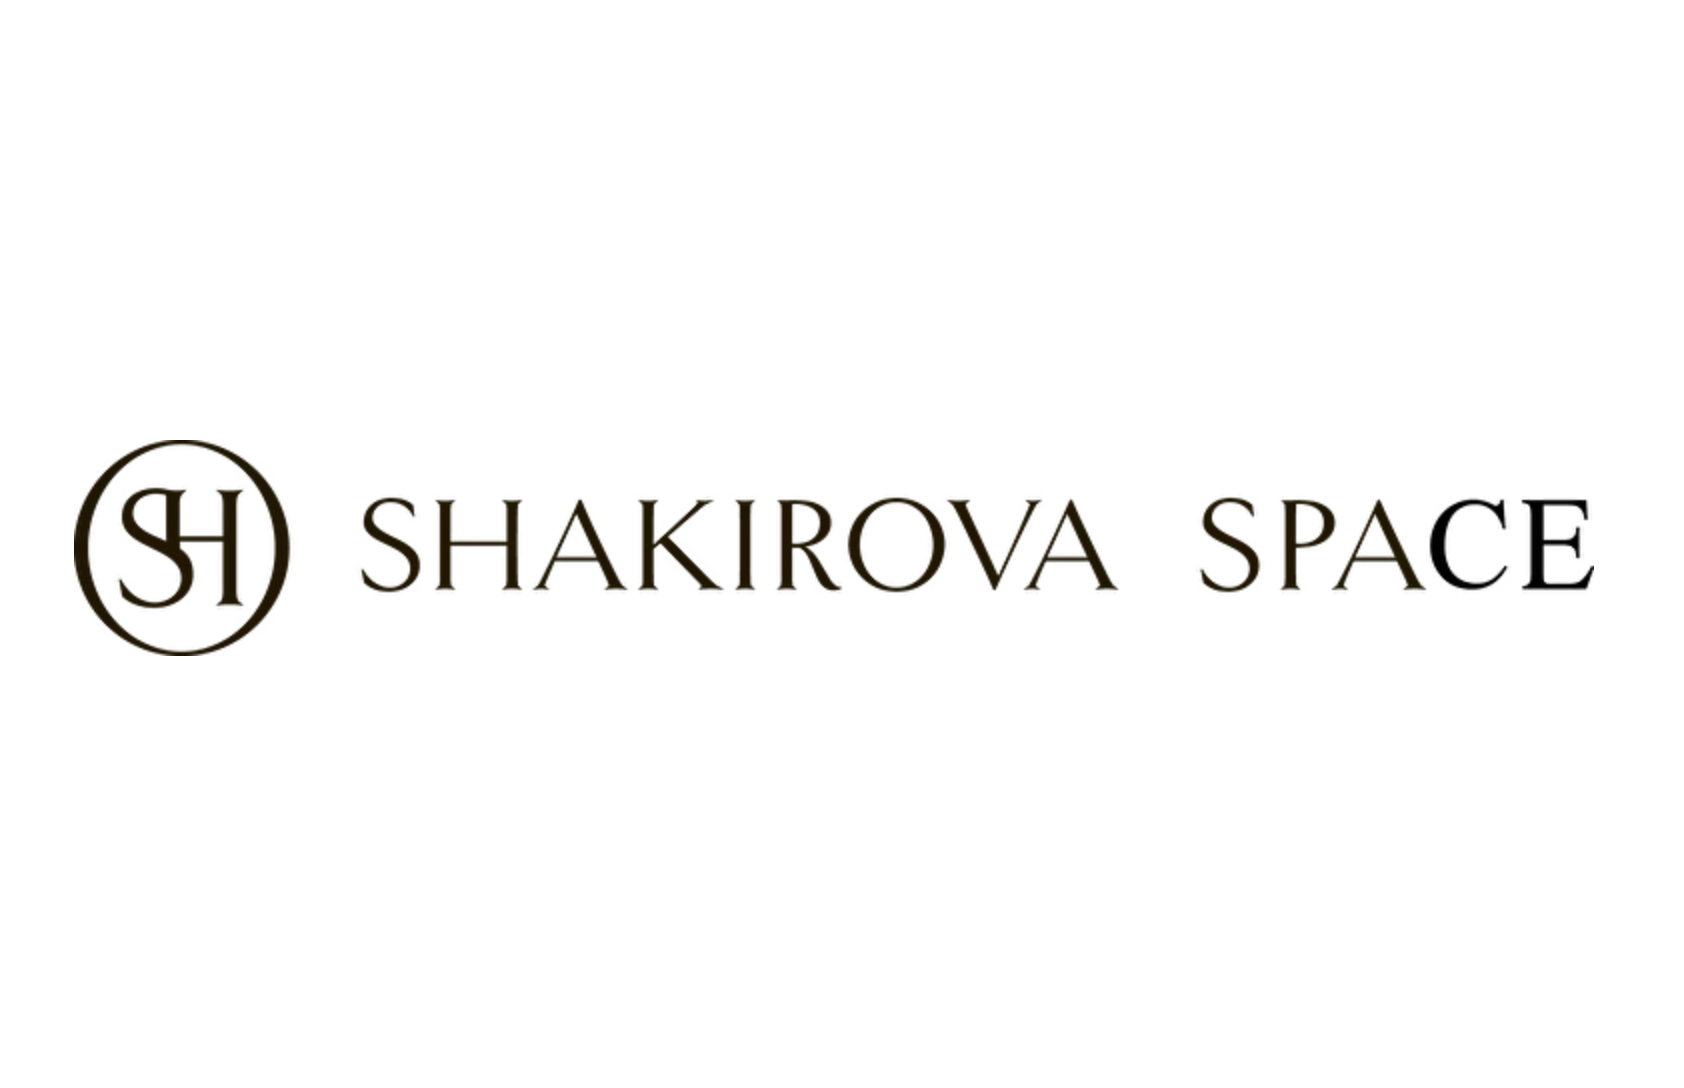 Shakirova Space